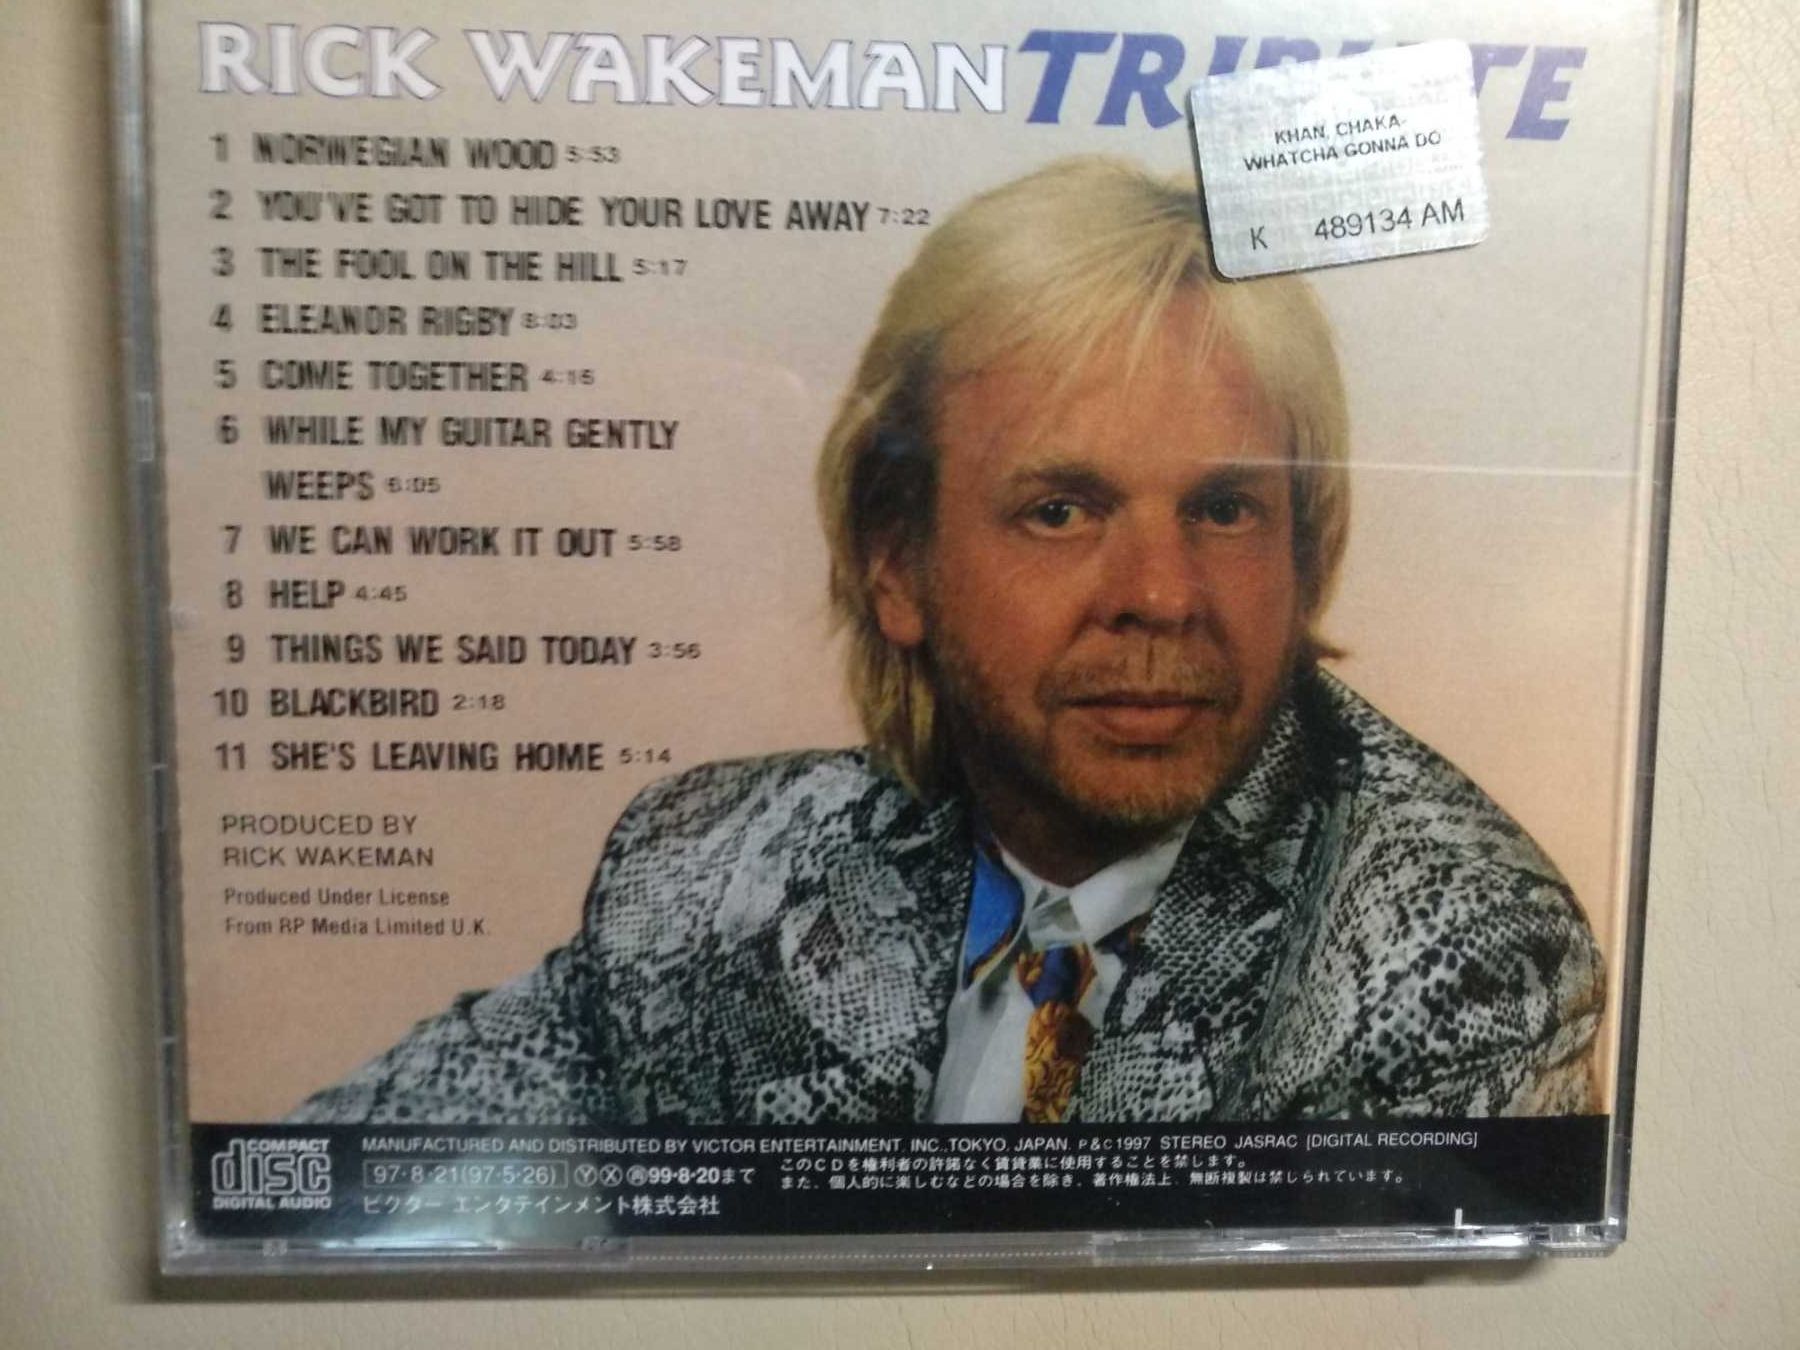 Rick Wakeman – Tribute To The Beatles CD.